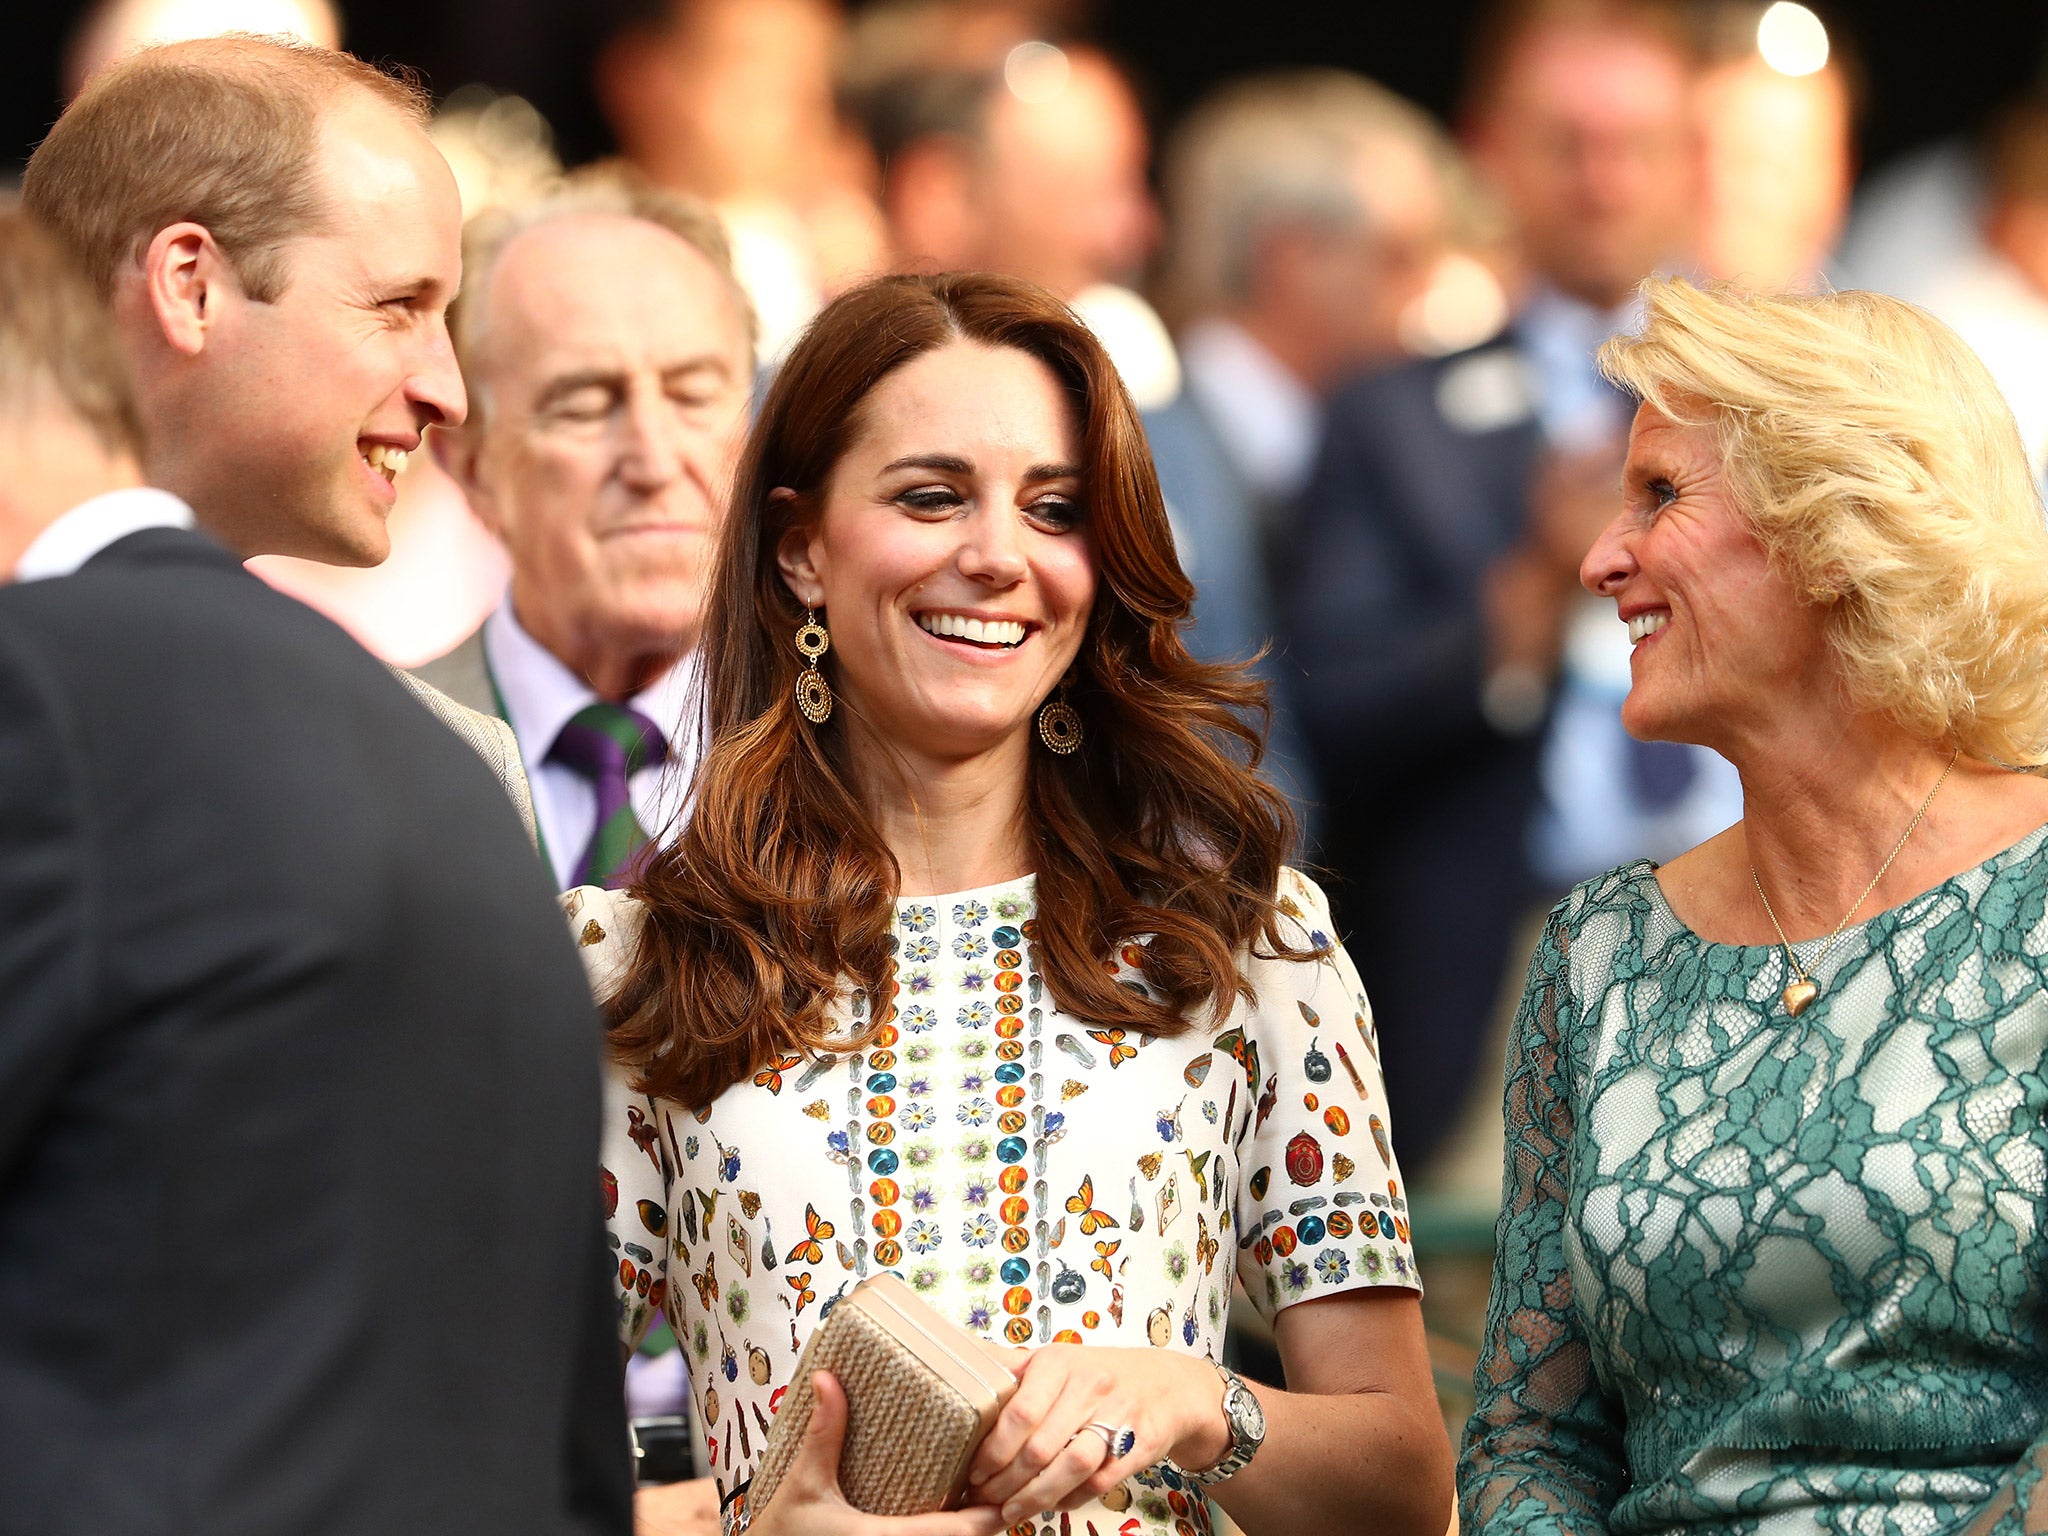 The Duke and Duchess of Cambridge watch Watson and Kontinen win the title